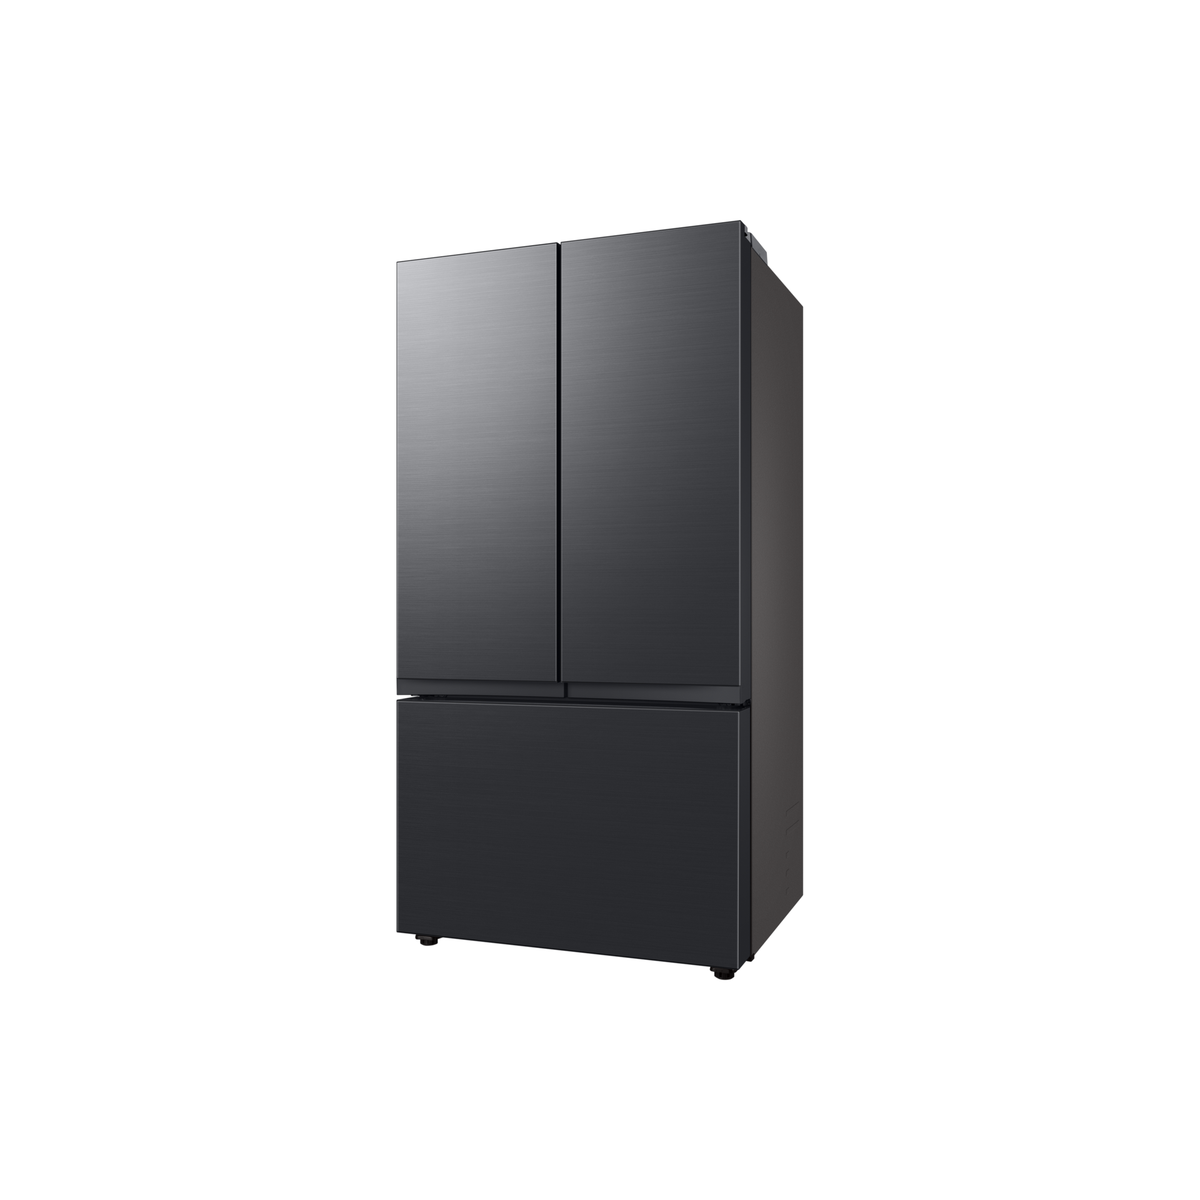 Samsung Bespoke 674L Freestanding French Style Fridge Freezer - Black | RF24BB620EB1EU from Samsung - DID Electrical